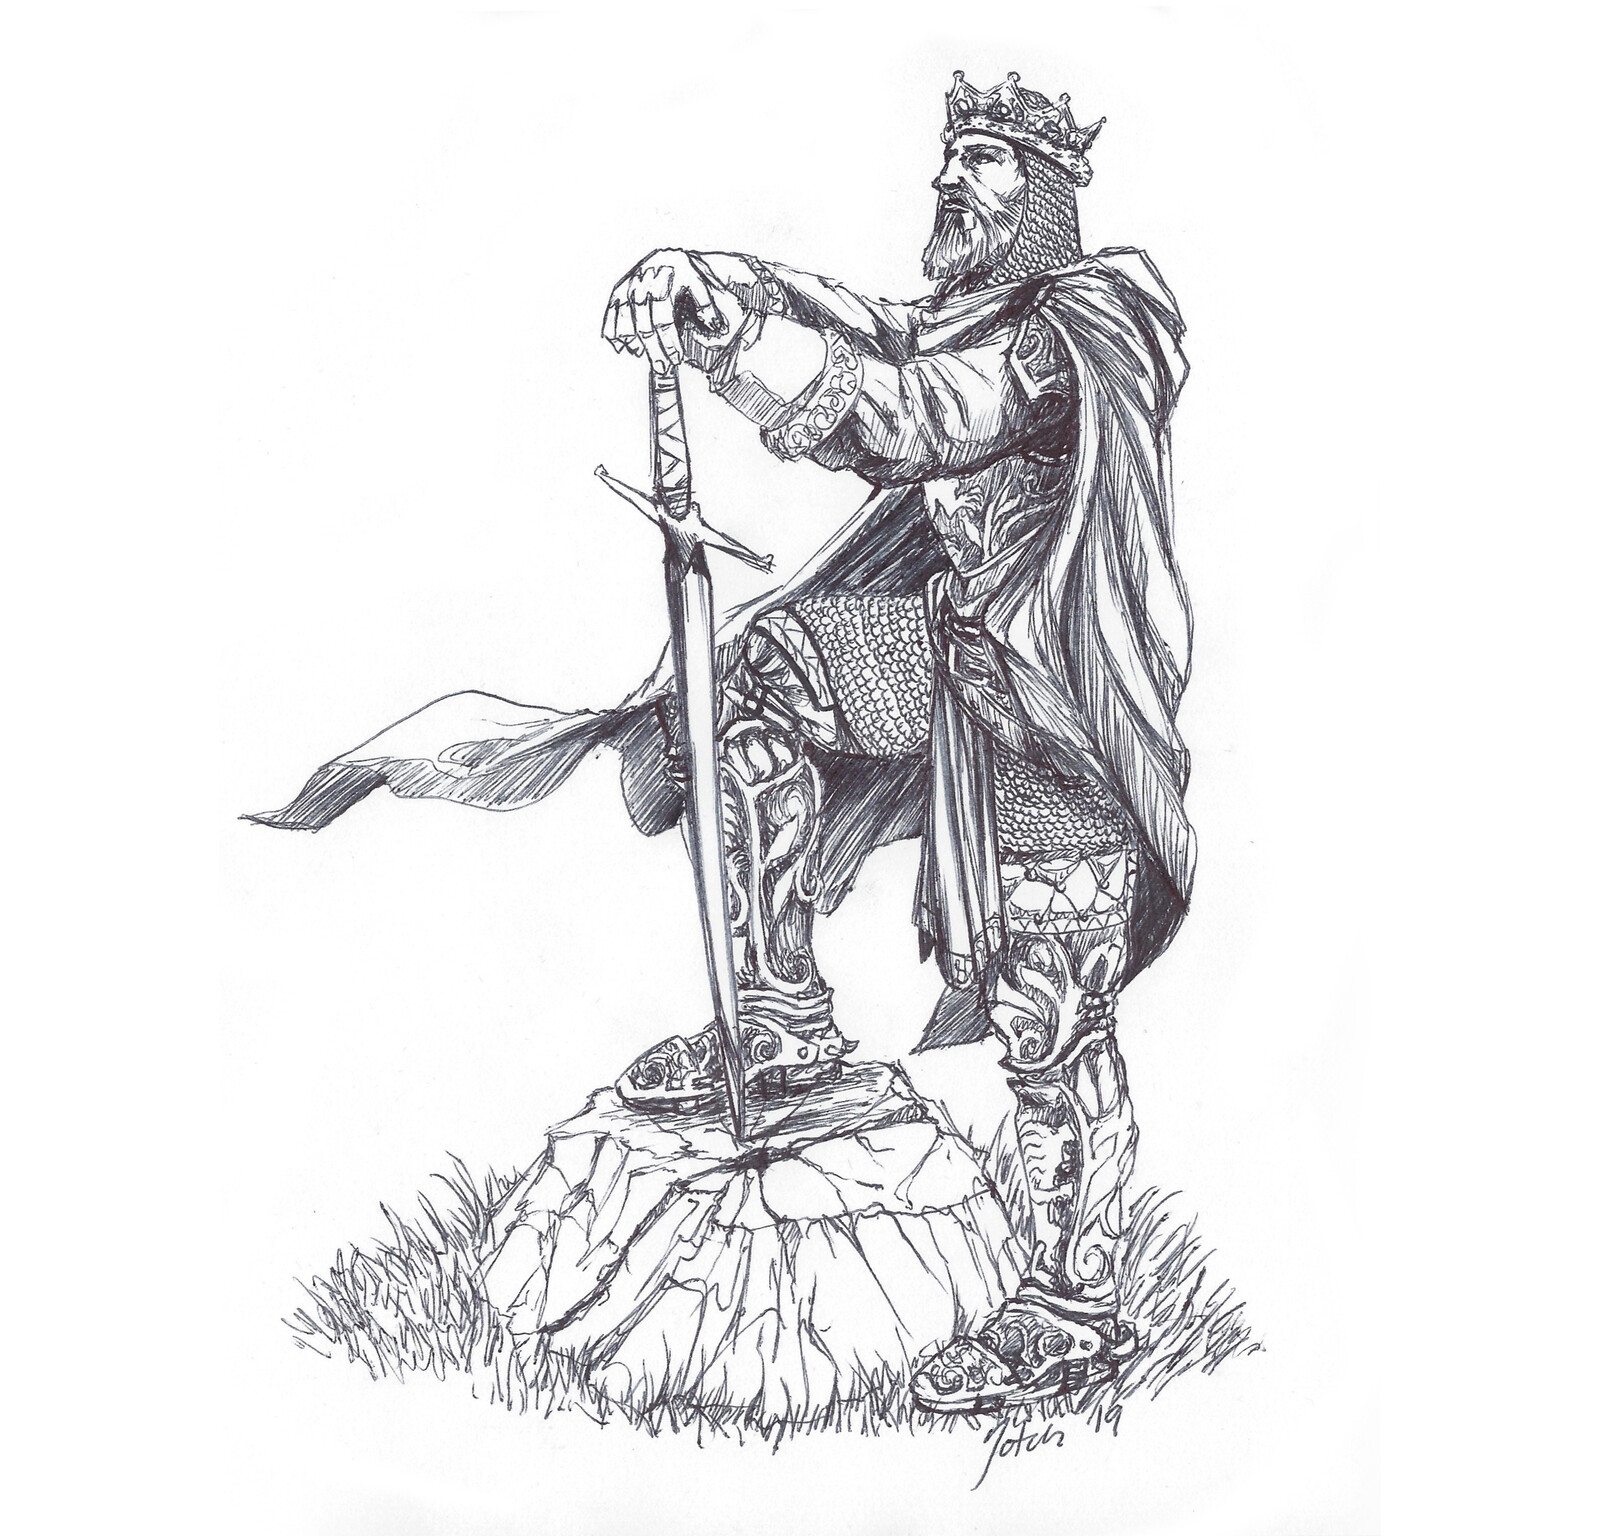 Johnatan Correa - King Arthur (Sketch)